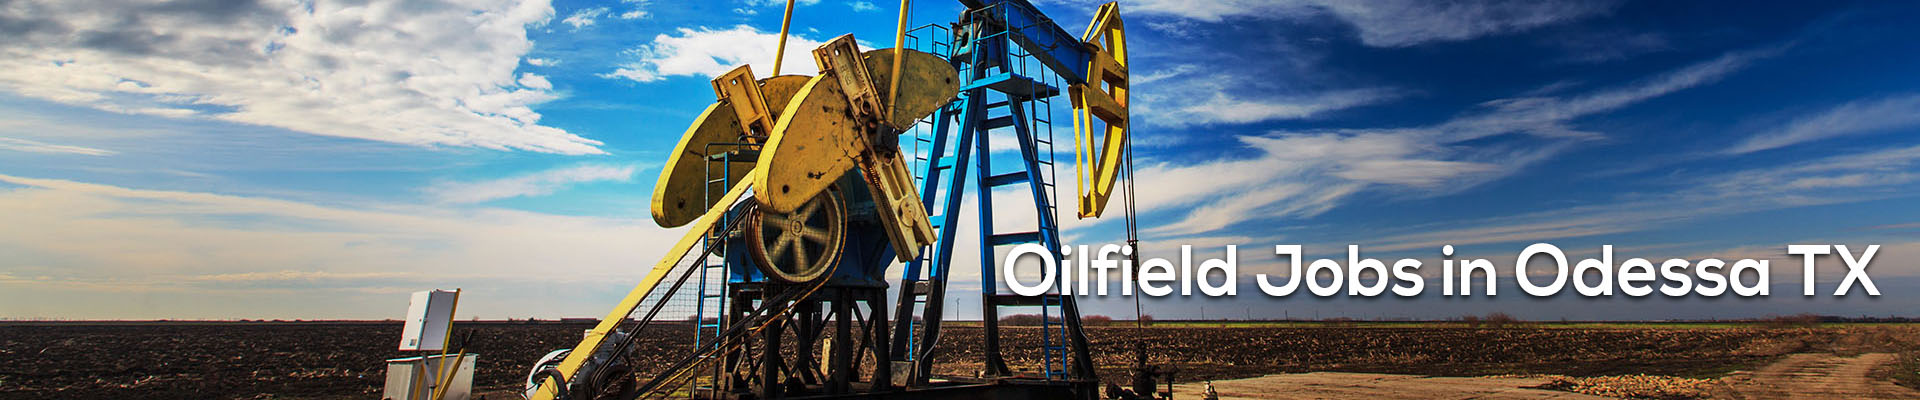 Oilfield Jobs - Odessa TX